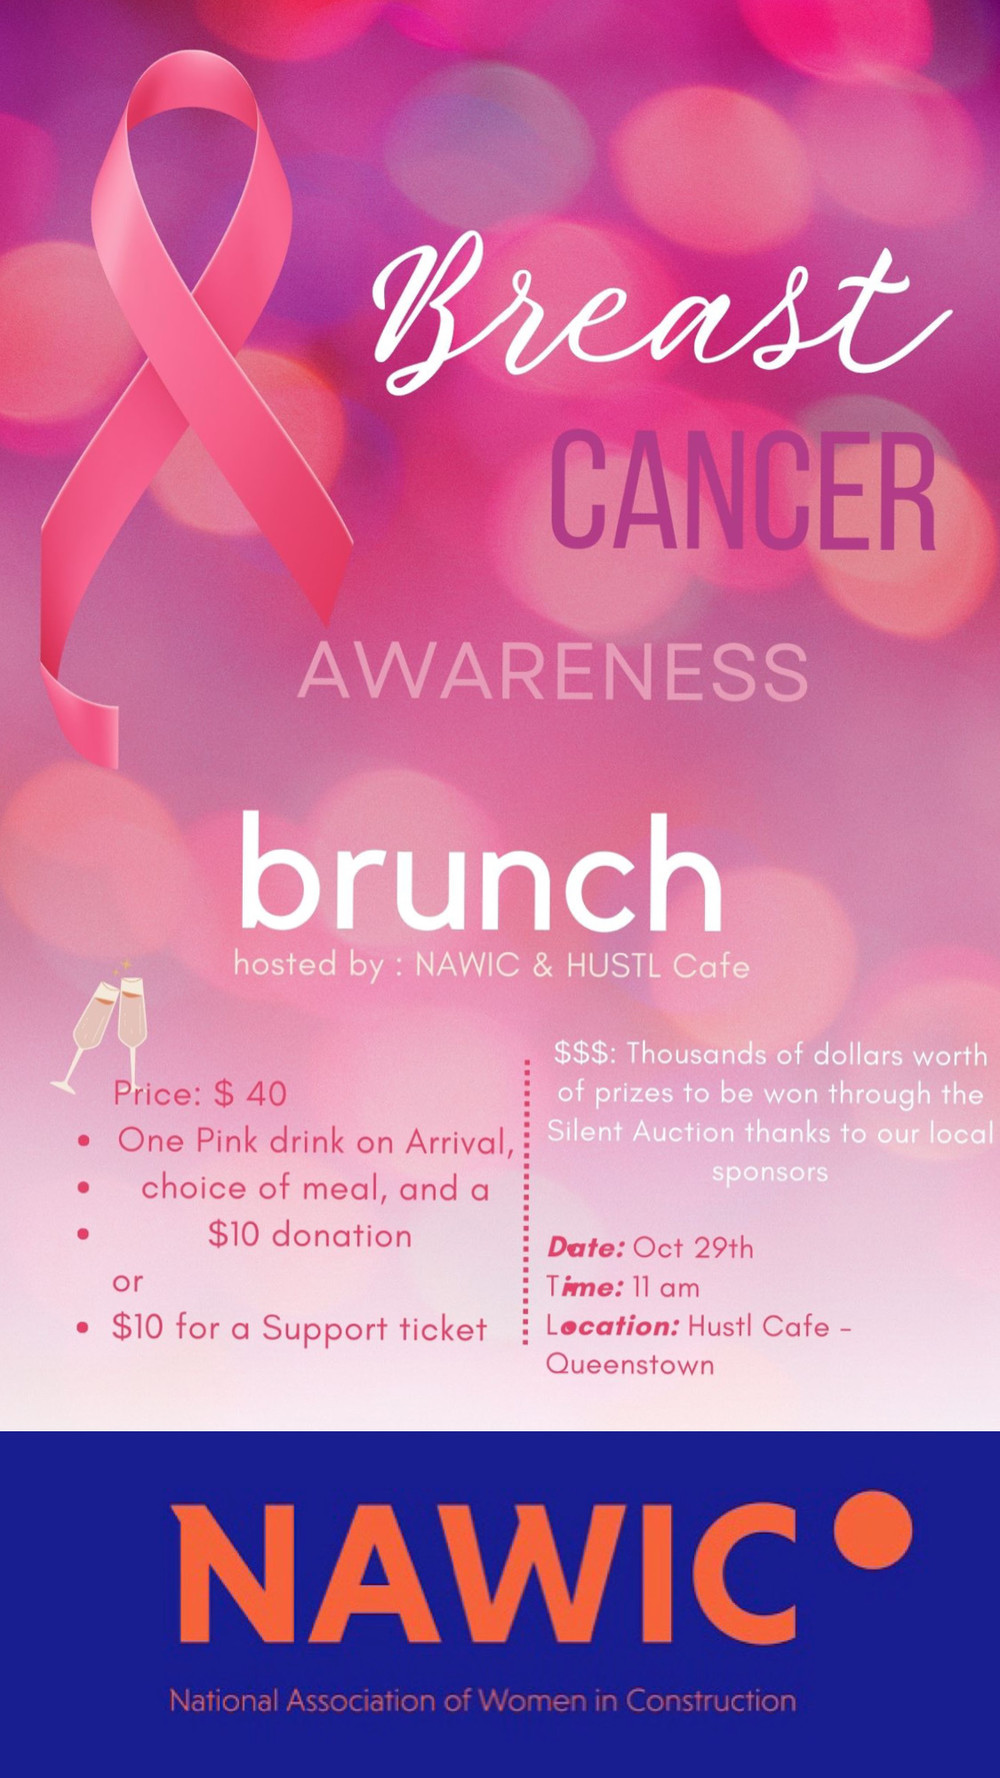 Breast cancer awareness brunch